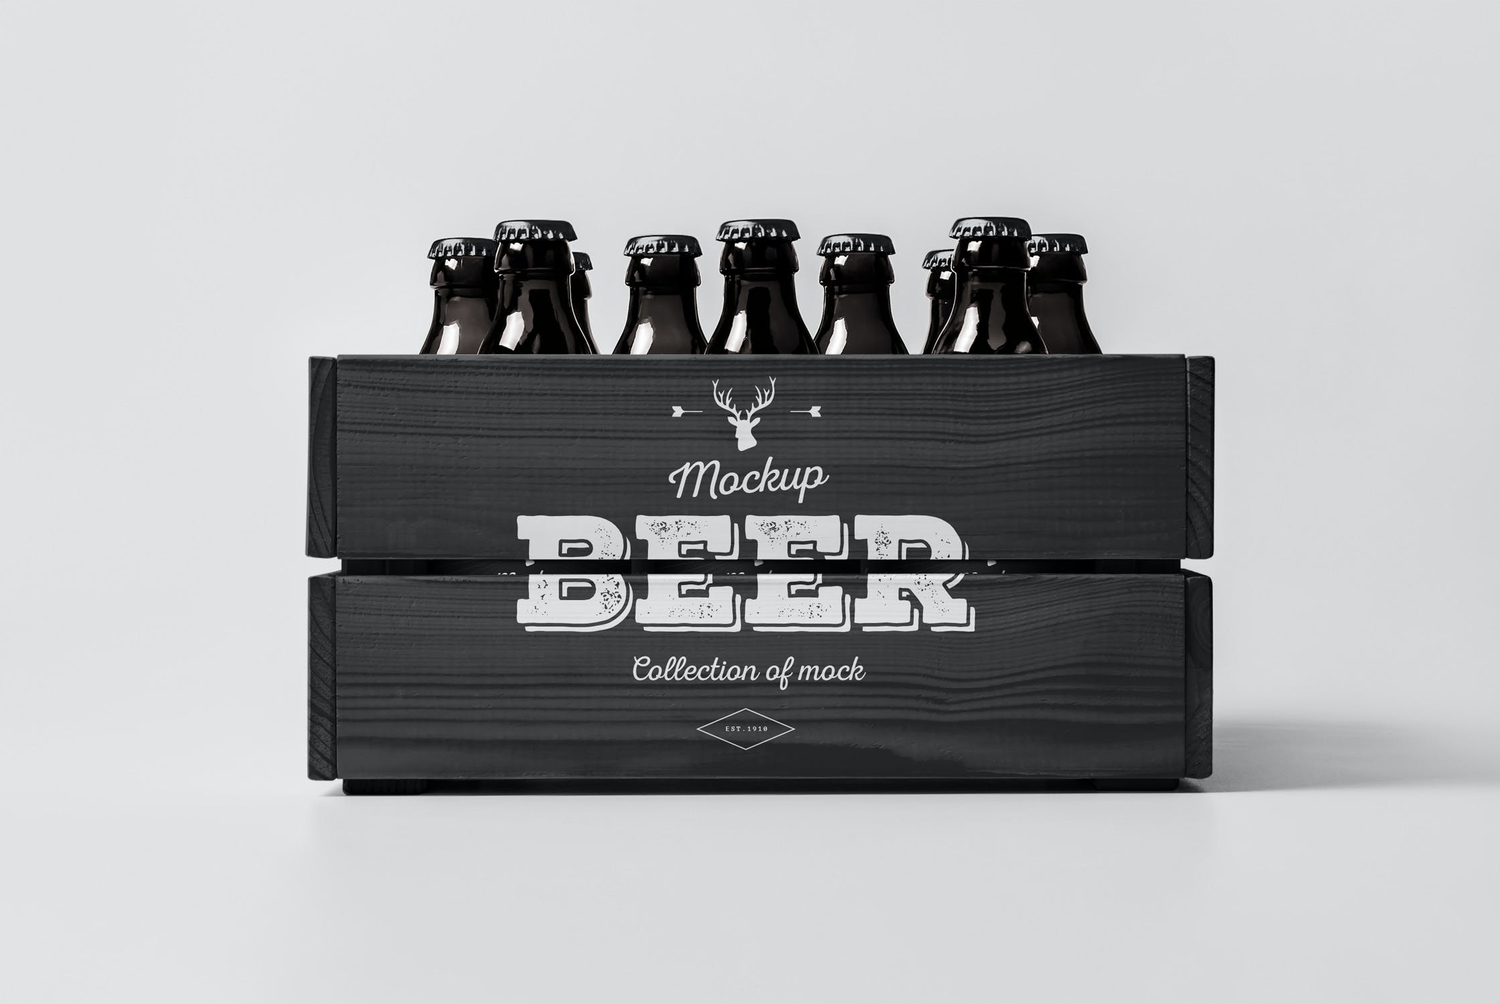 4698 7款啤酒瓶箱装包装设计PS样机 Beer Mock-up 2@GOOODME.COM